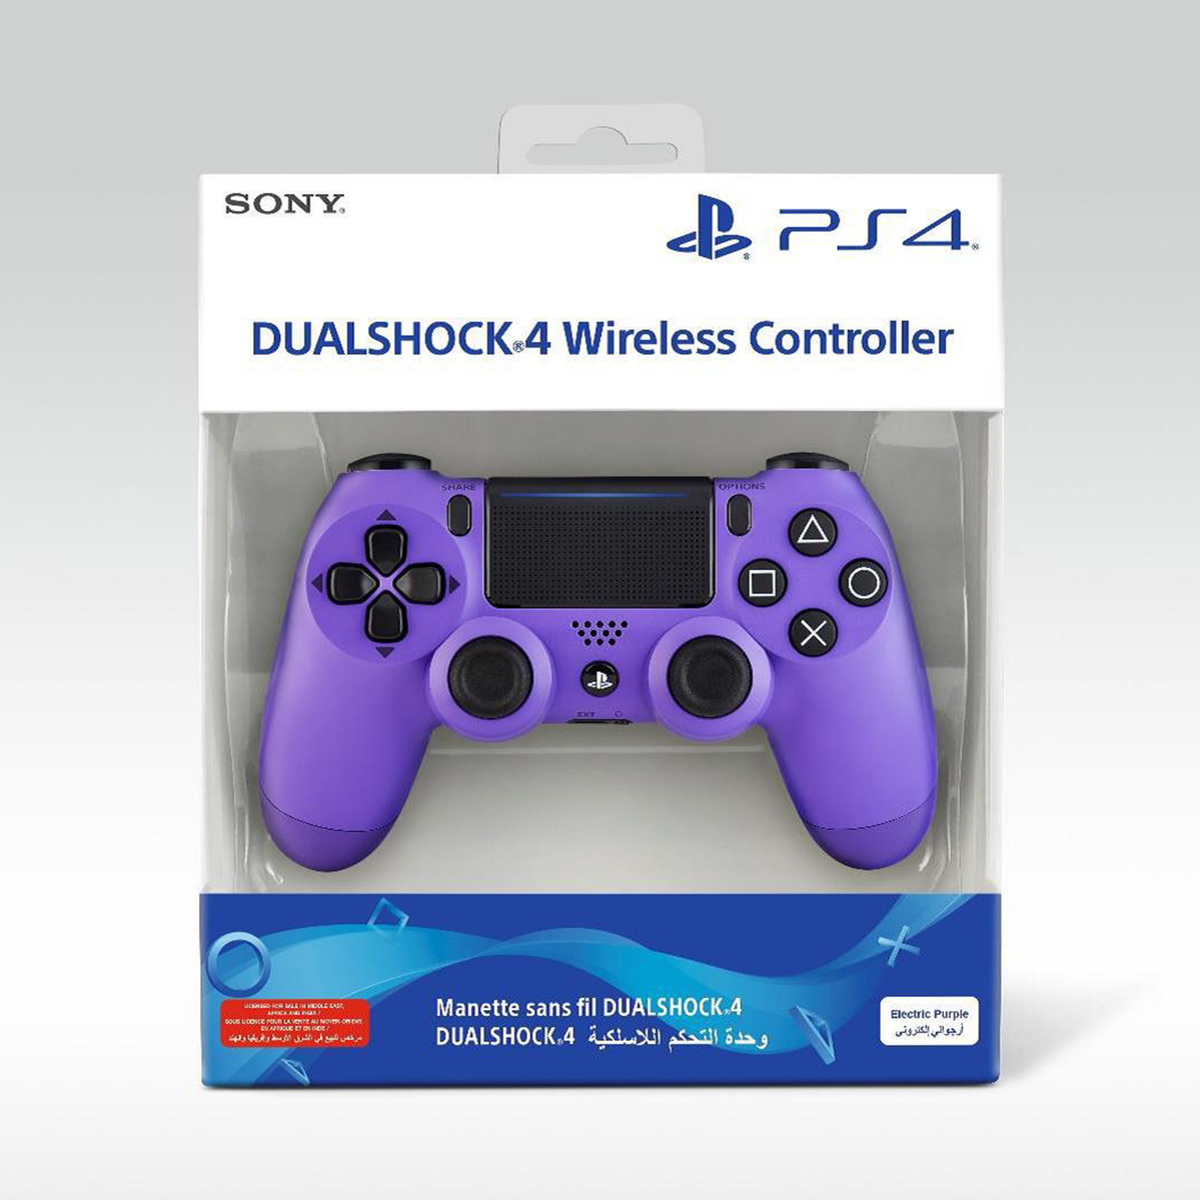 sony dualshock 4 wireless controller electric purple